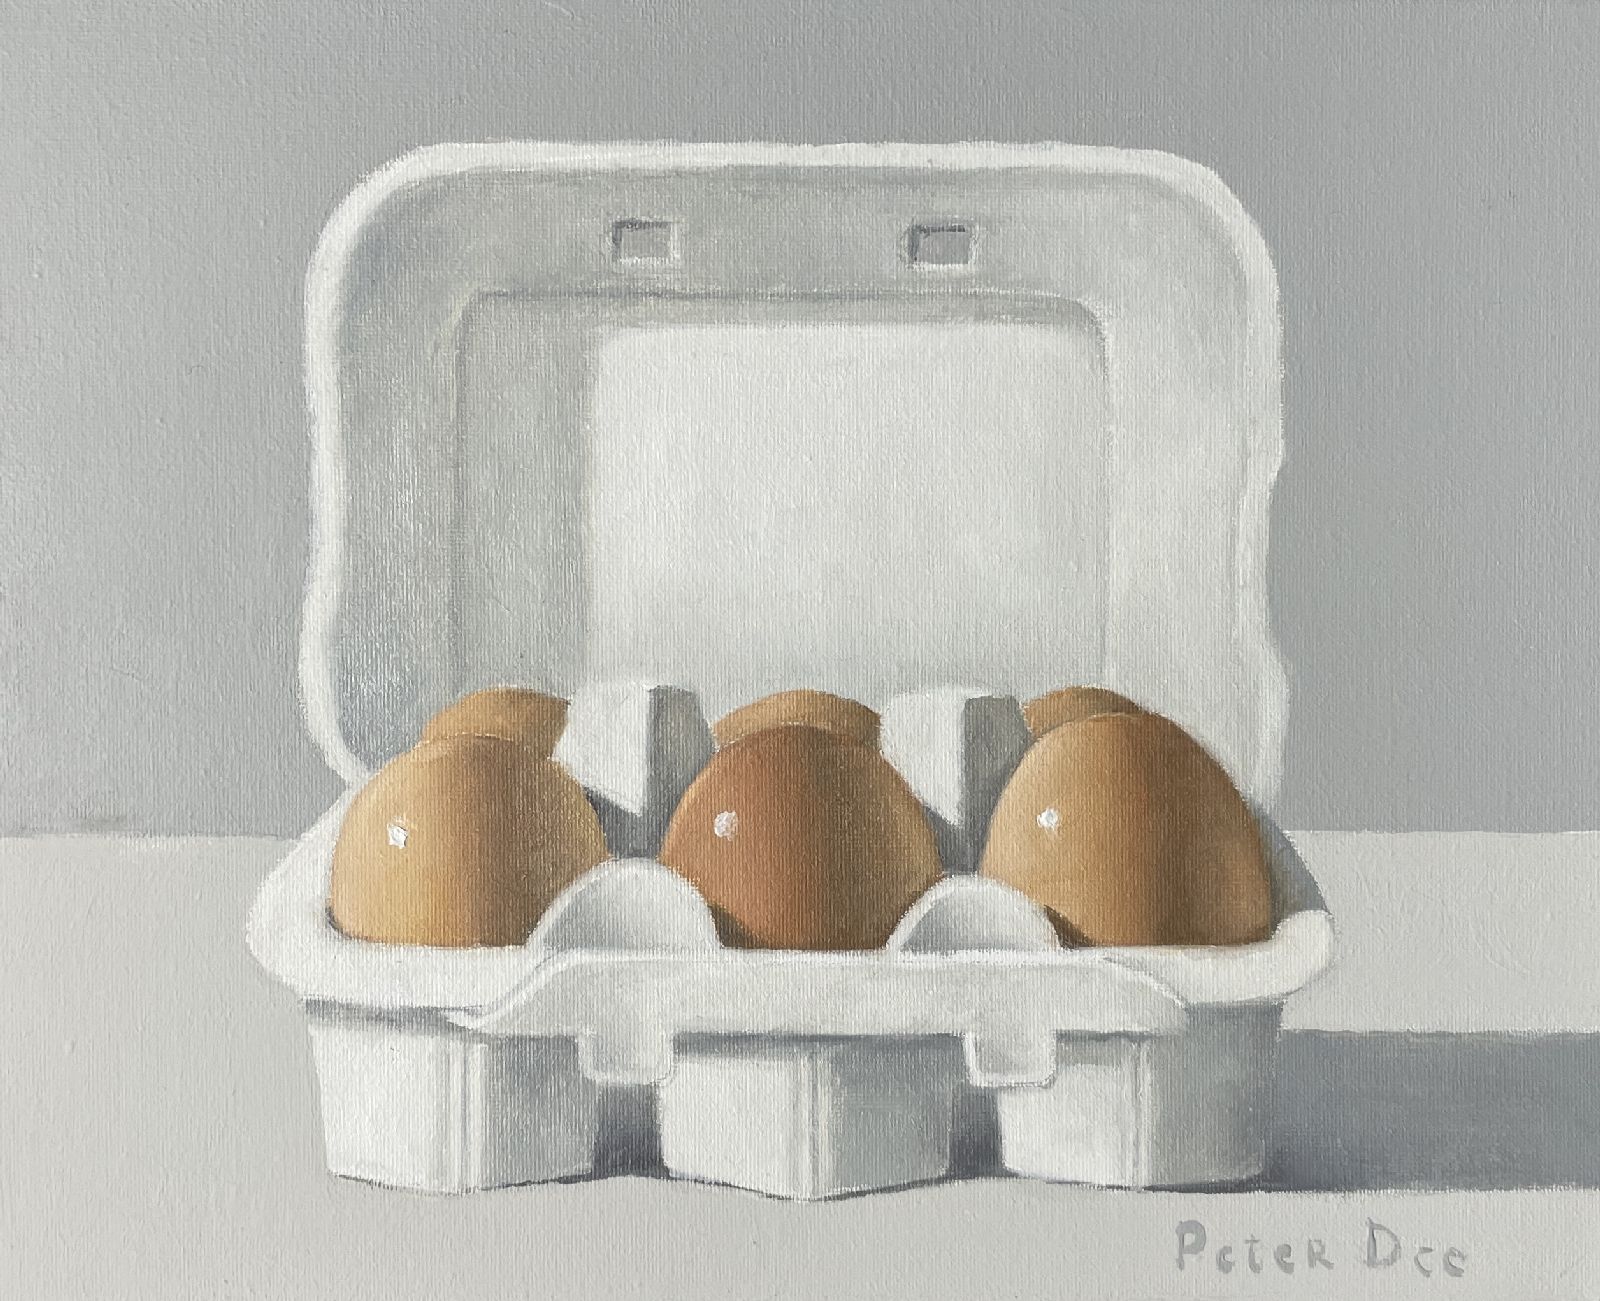 Peter Dee - Box of eggs